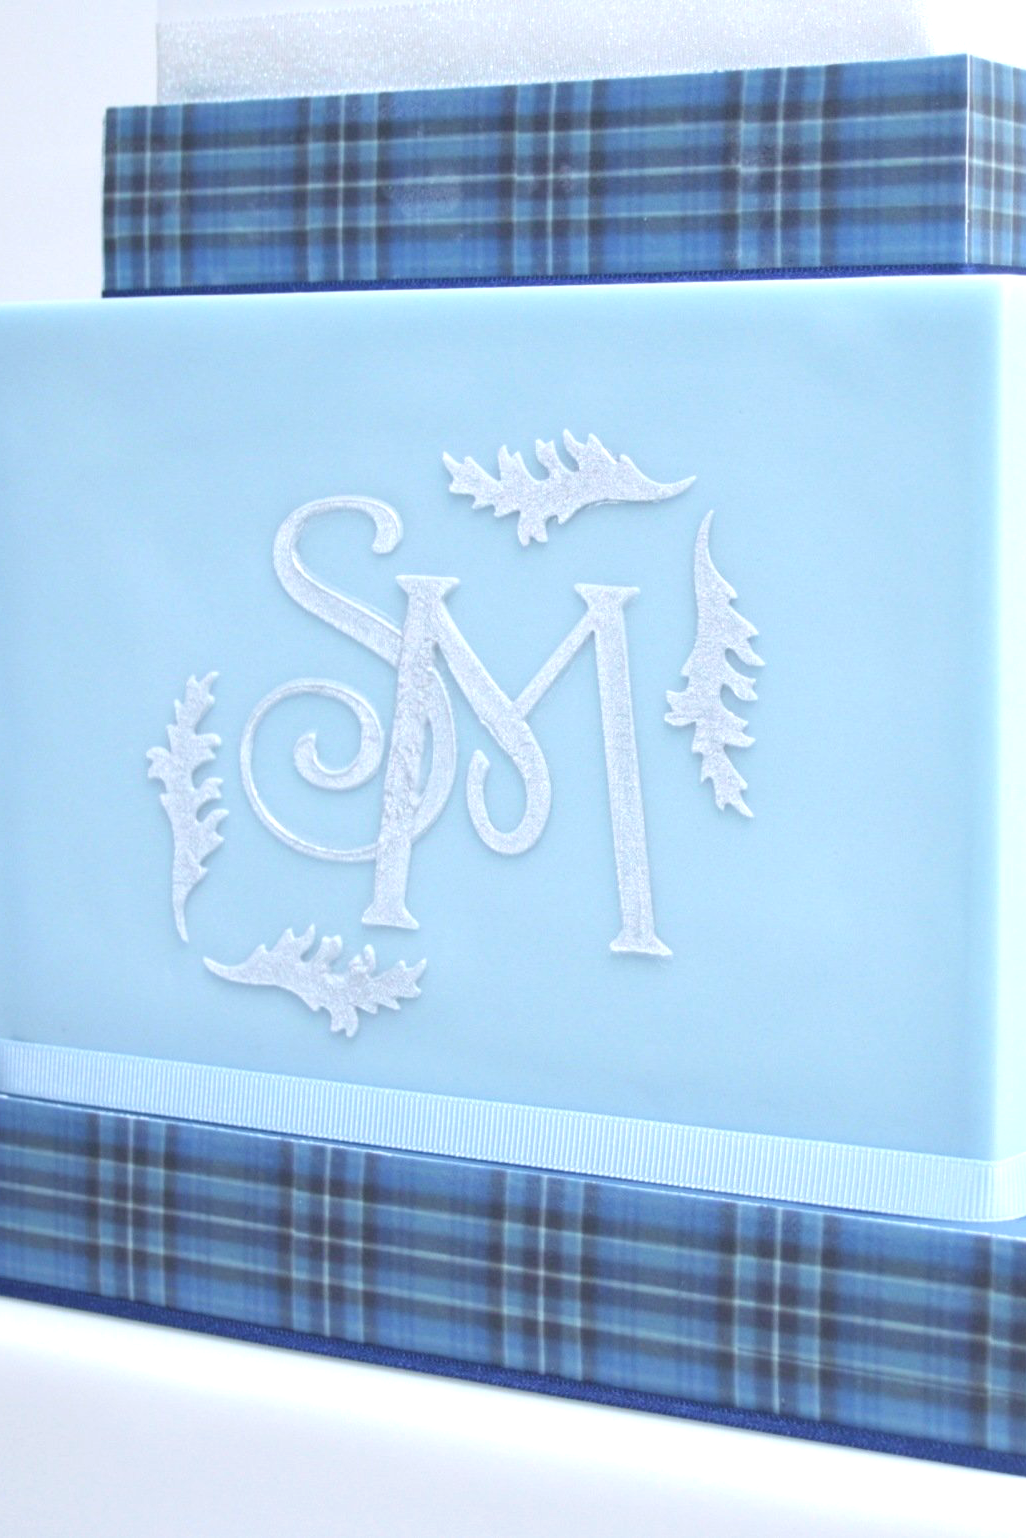 Scottish tartan wedding cake with silver stencil monogram. cake by Caroline Halliday, based on an original design by Kim Gordon